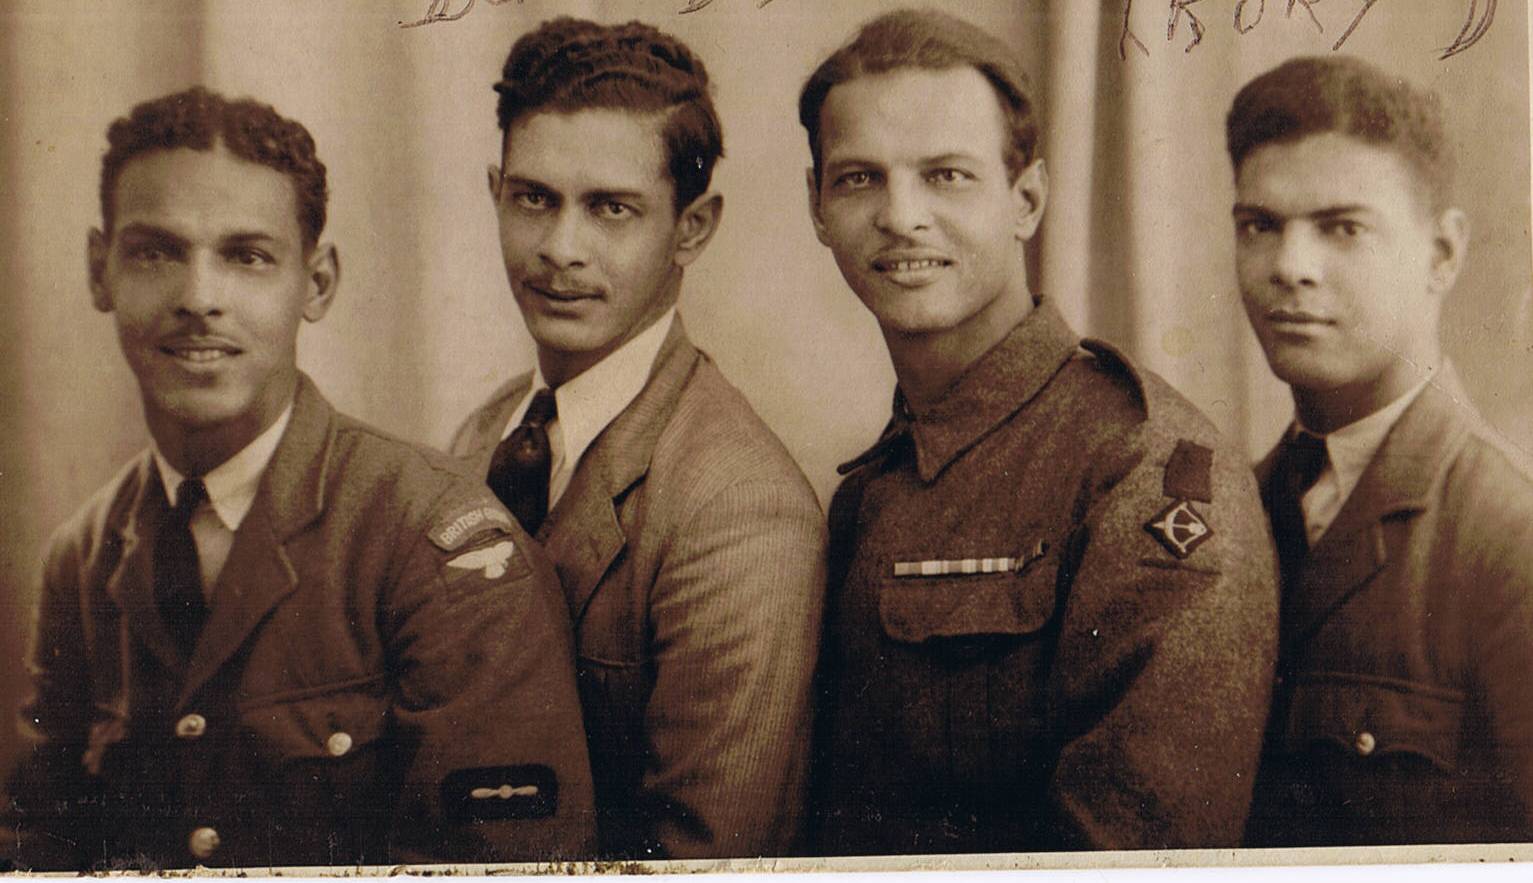 A sepia photograph of four men in uniform